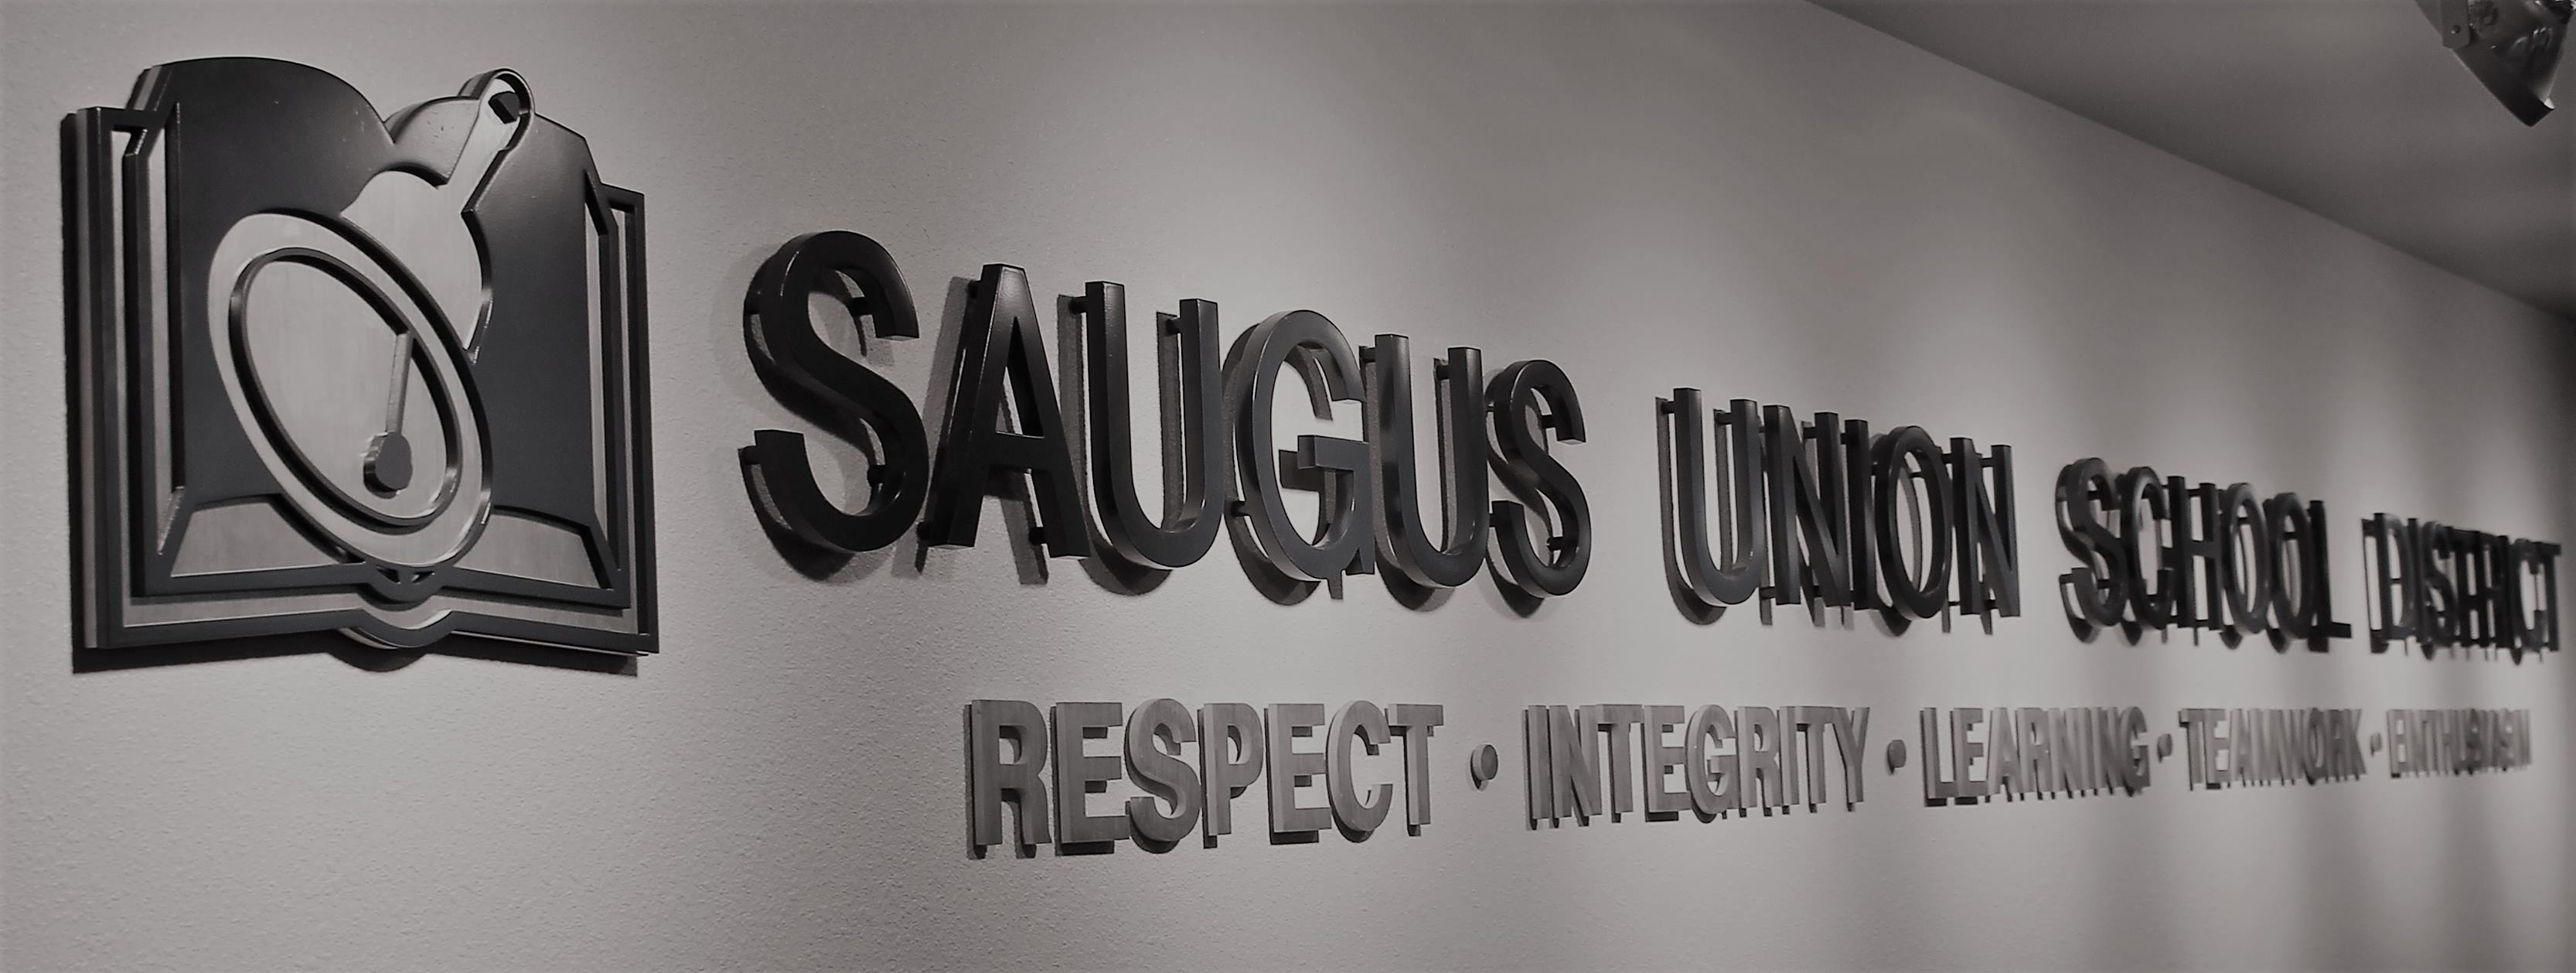 Saugus Union School District sign